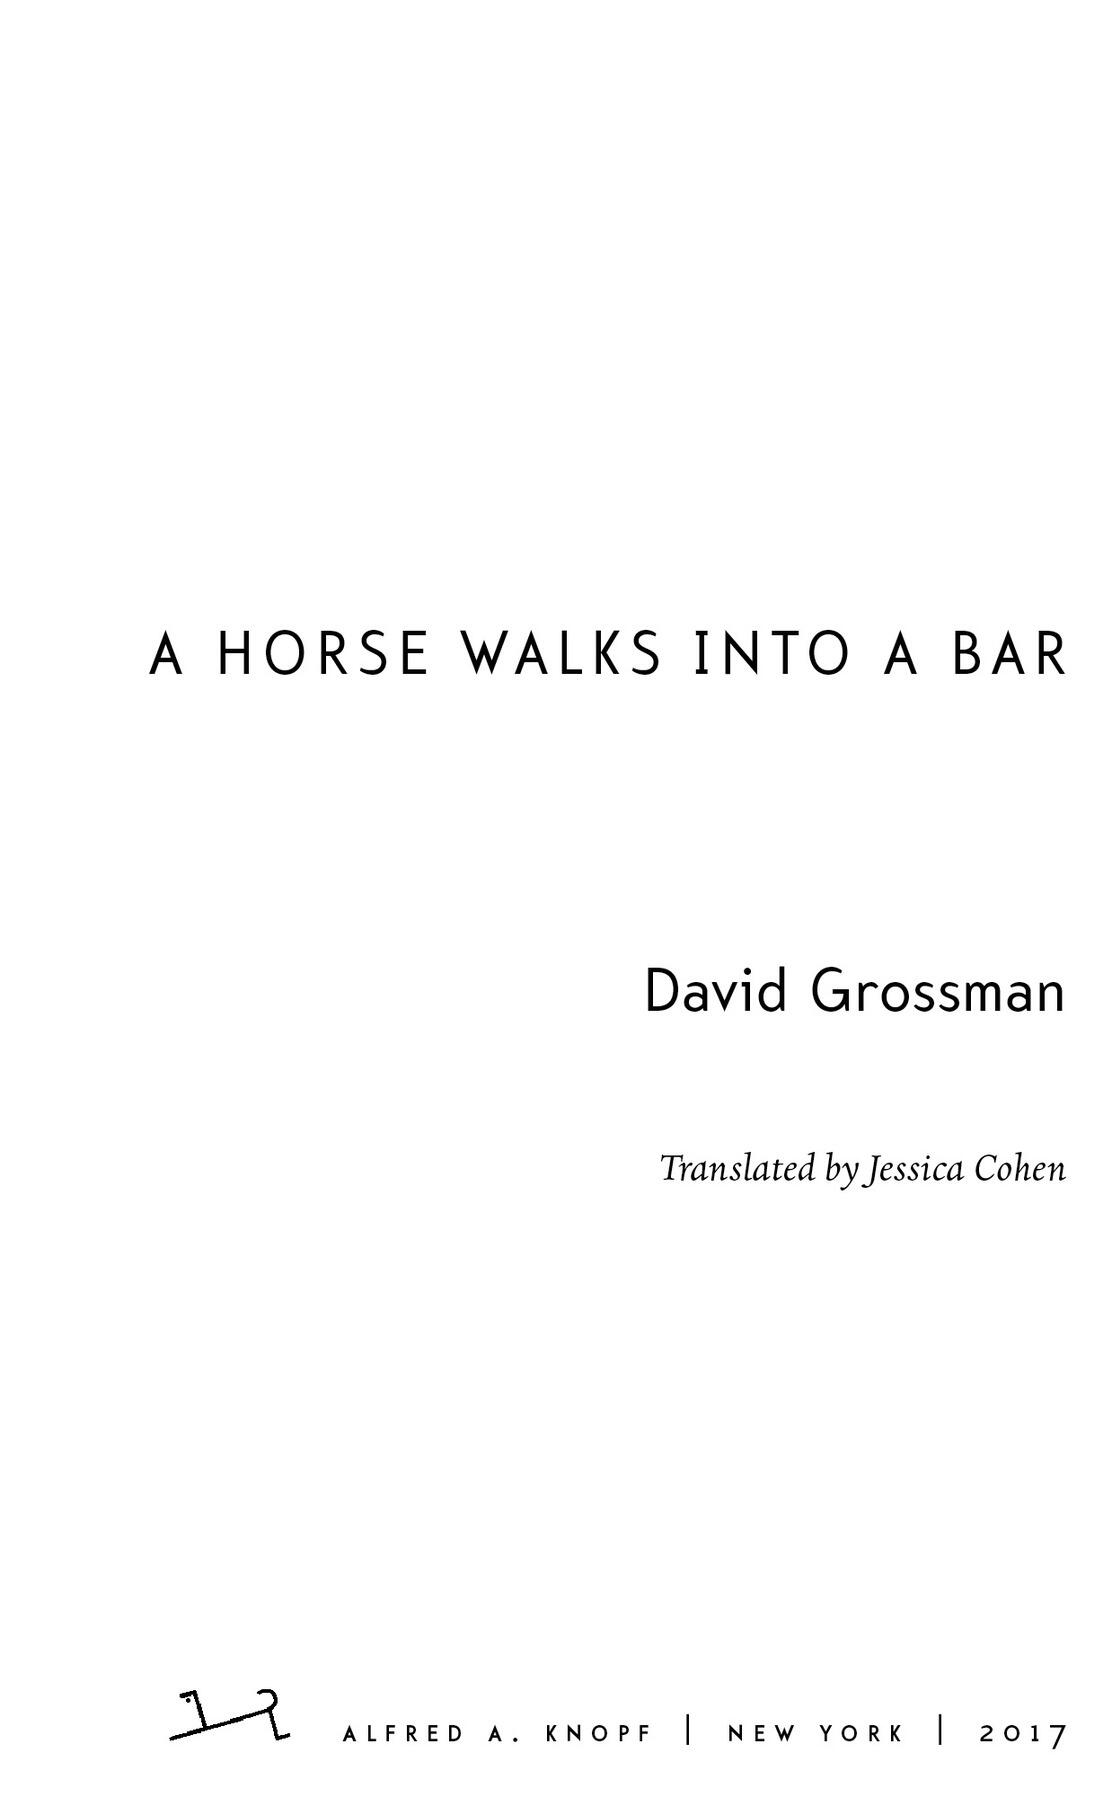 A Horse Walks into a Bar GOOD EVENING GOOD EVENING Good evening to the - фото 1